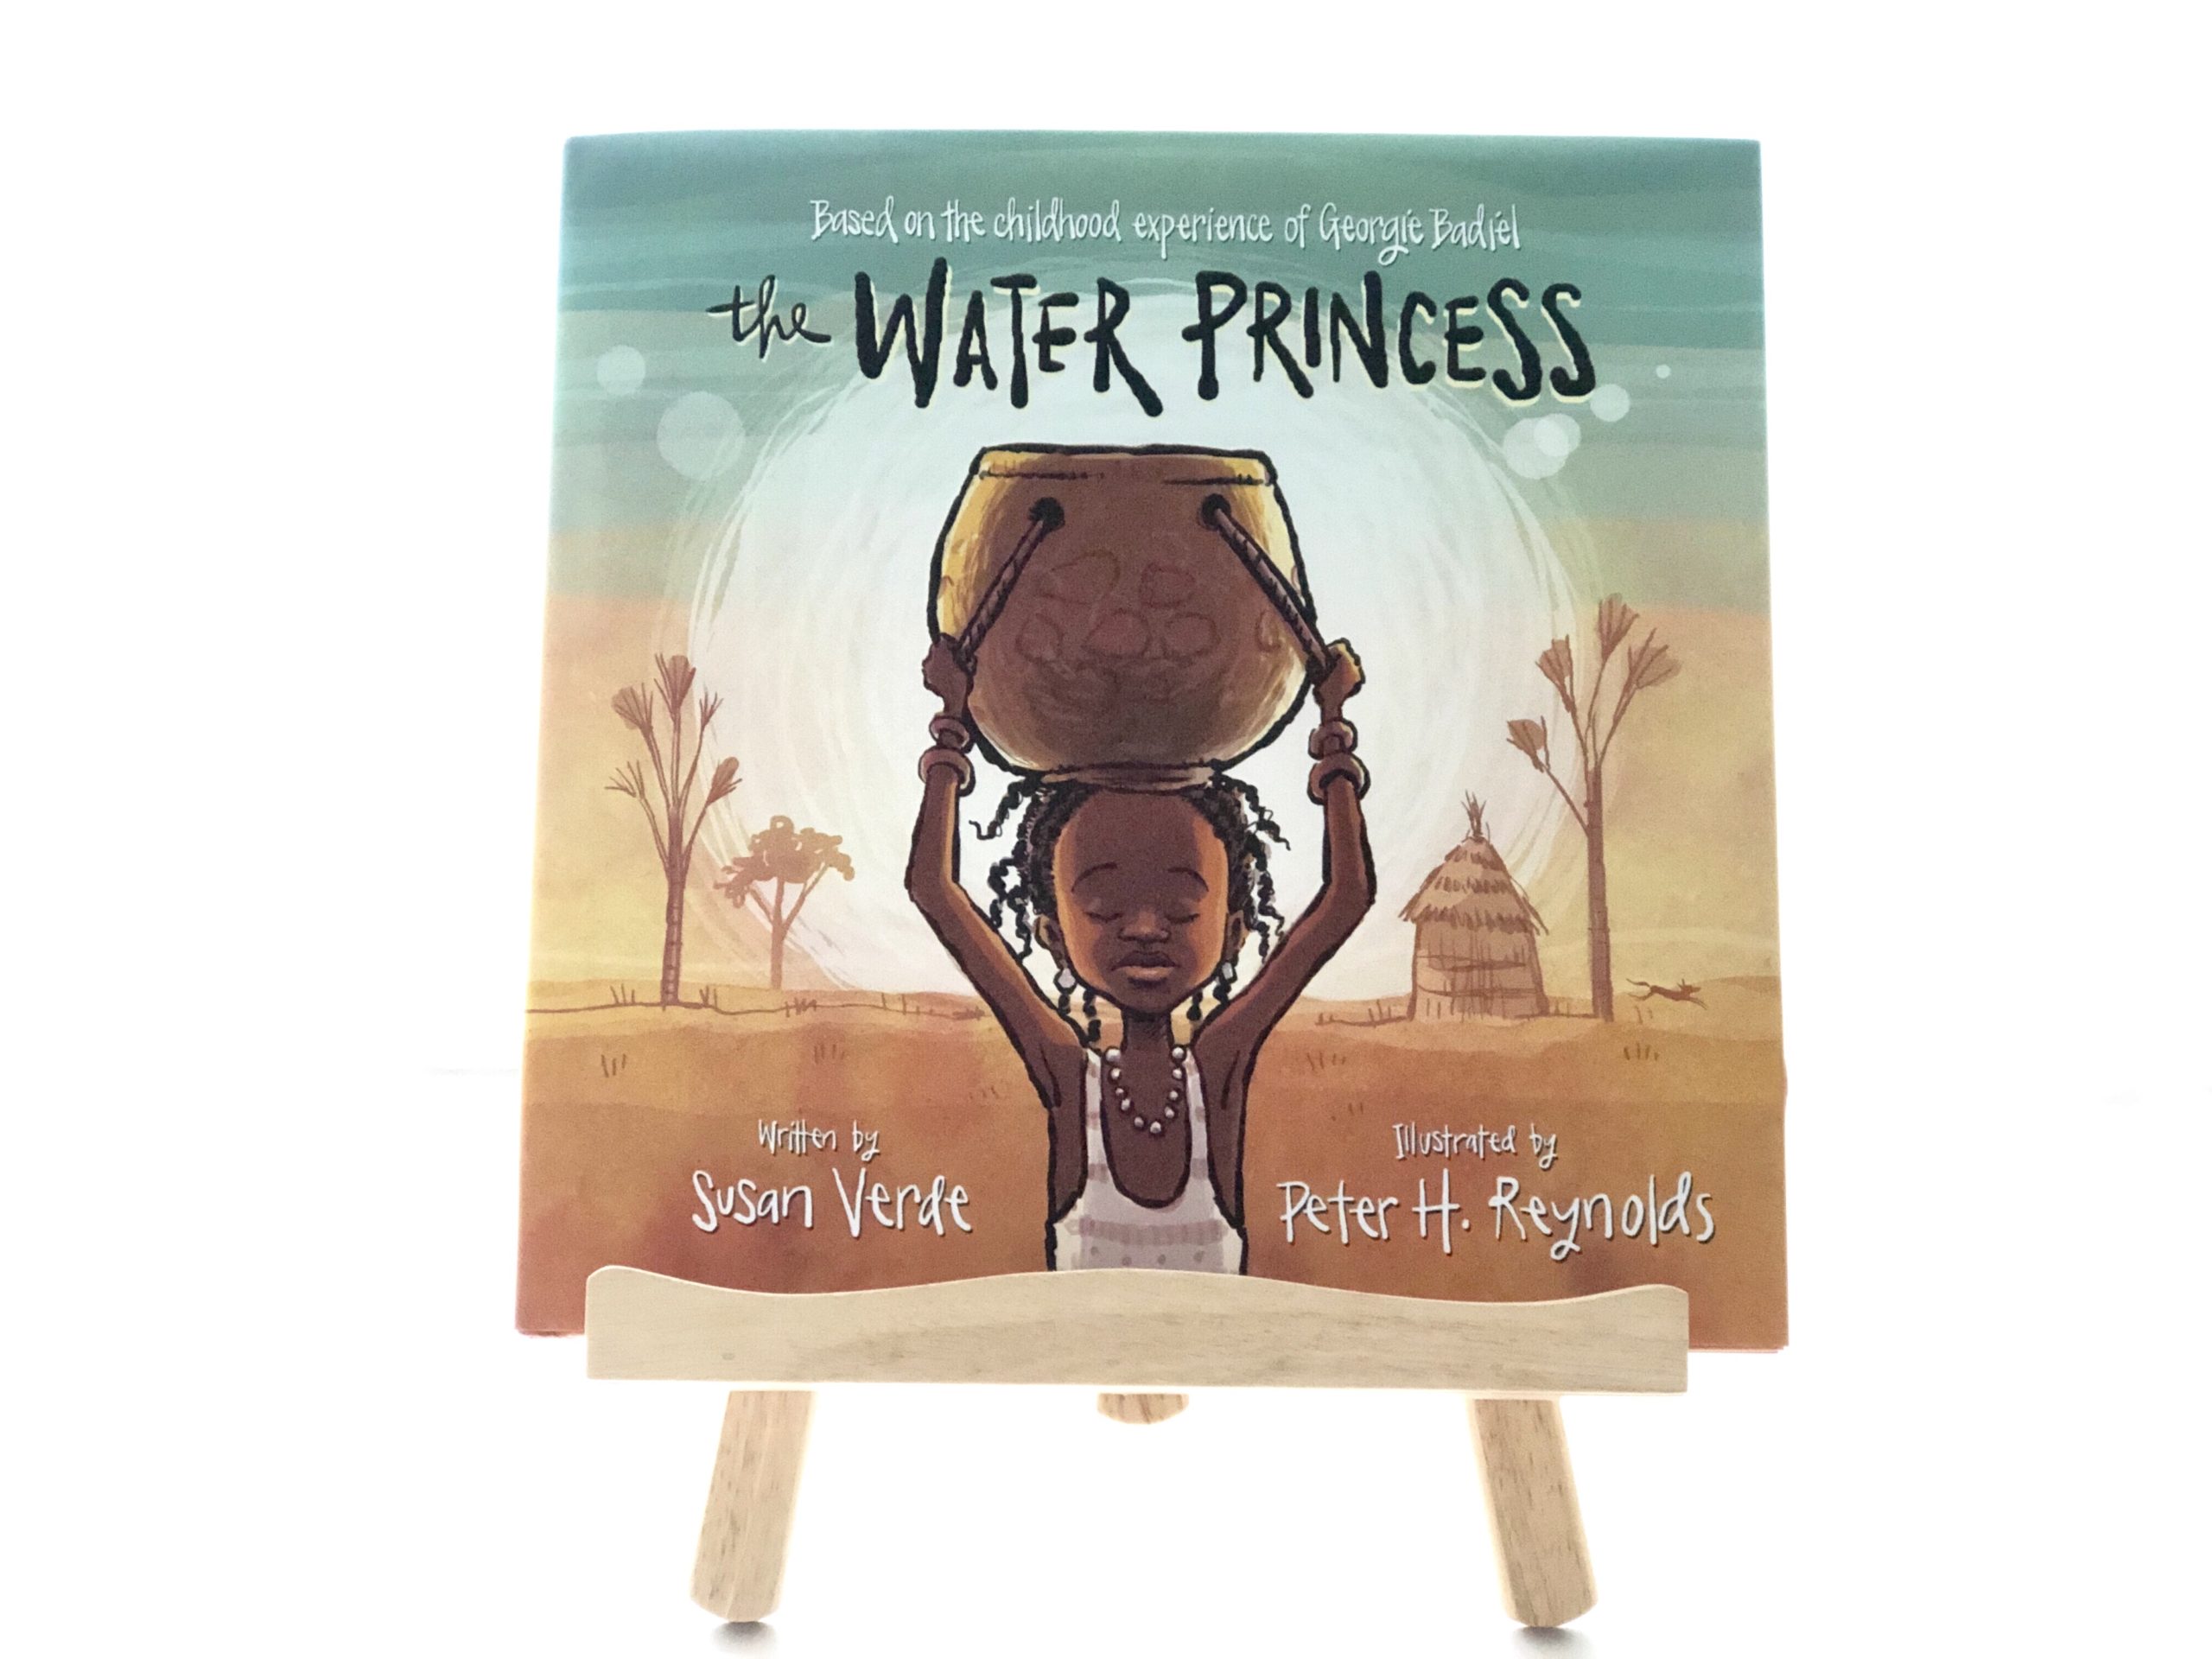 SDGs関連の絵本としてグローバル子育てとなるバイリンガル育児にオススメの英語絵本、”The Water Princess”